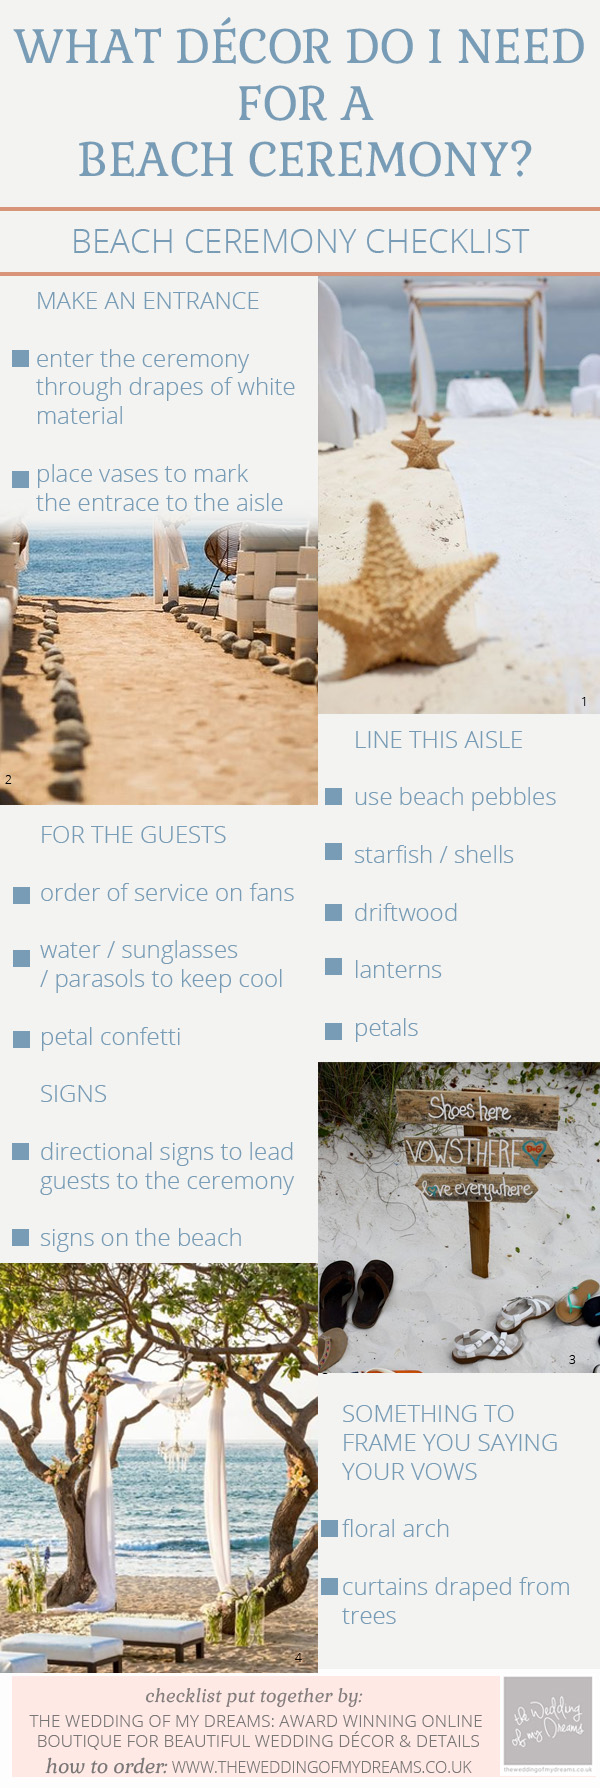 beach wedding ceremony decorations checklist